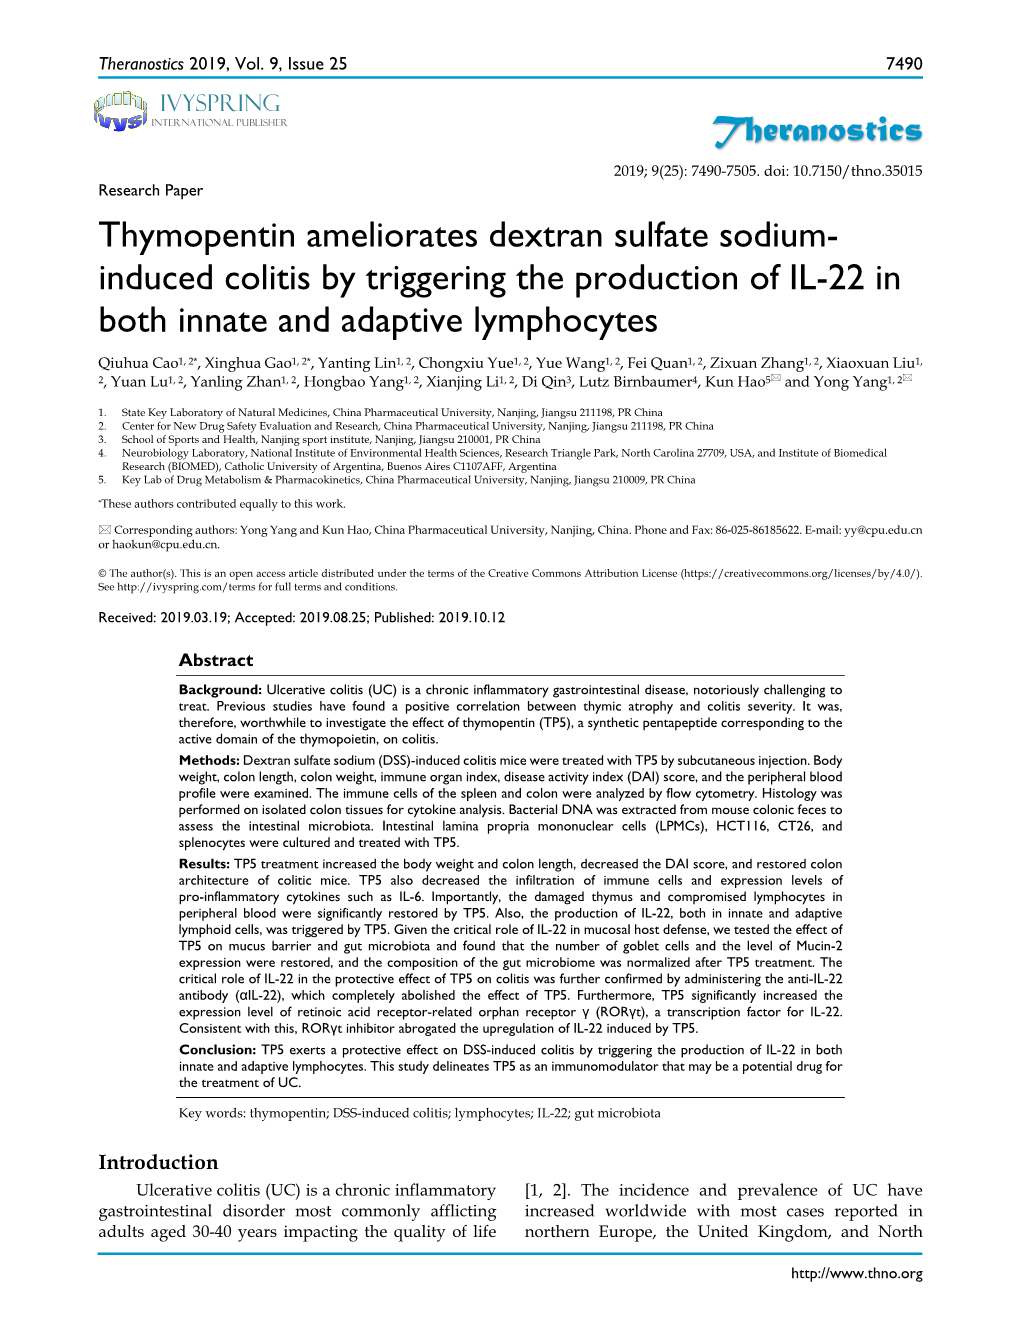 Thymopentin Ameliorates Dextran Sulfate Sodiuminduced Colitis By